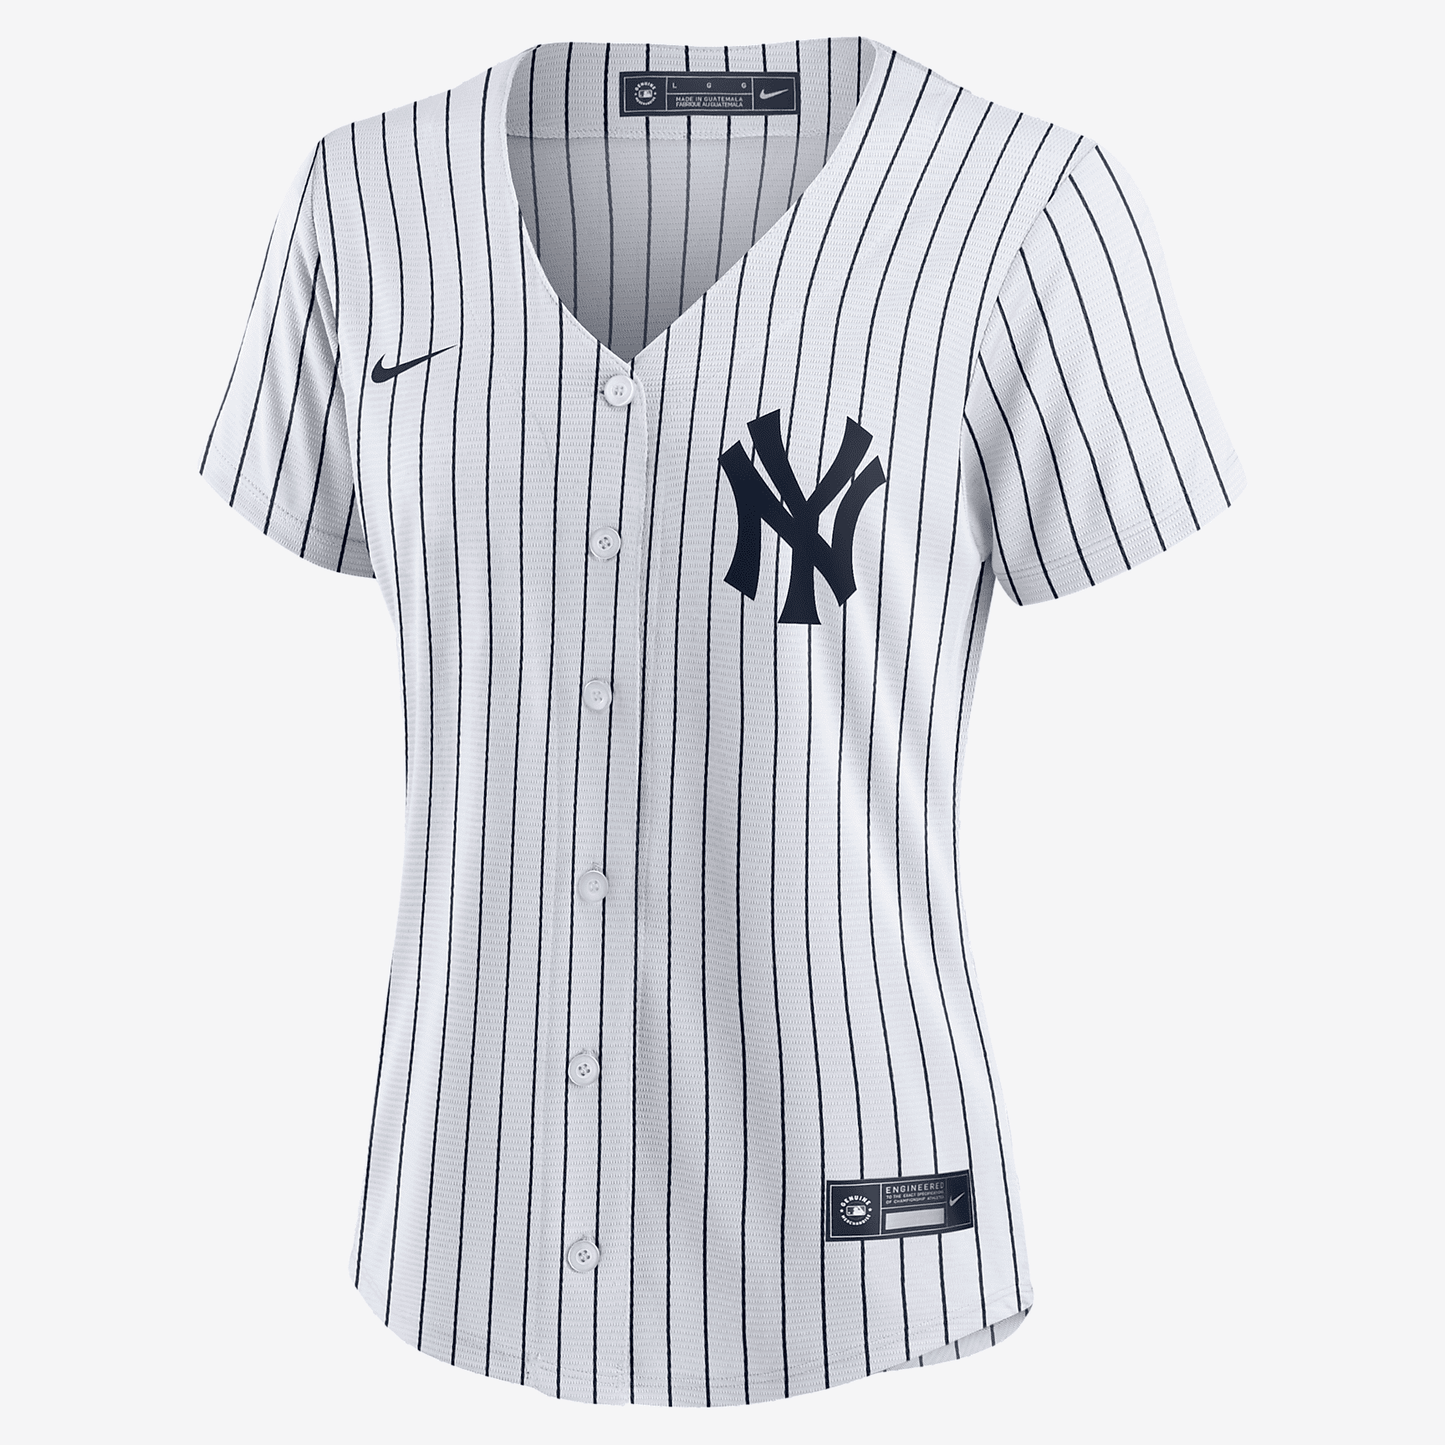 MLB New York Yankees (Gerrit Cole) Women's Replica Baseball Jersey - White